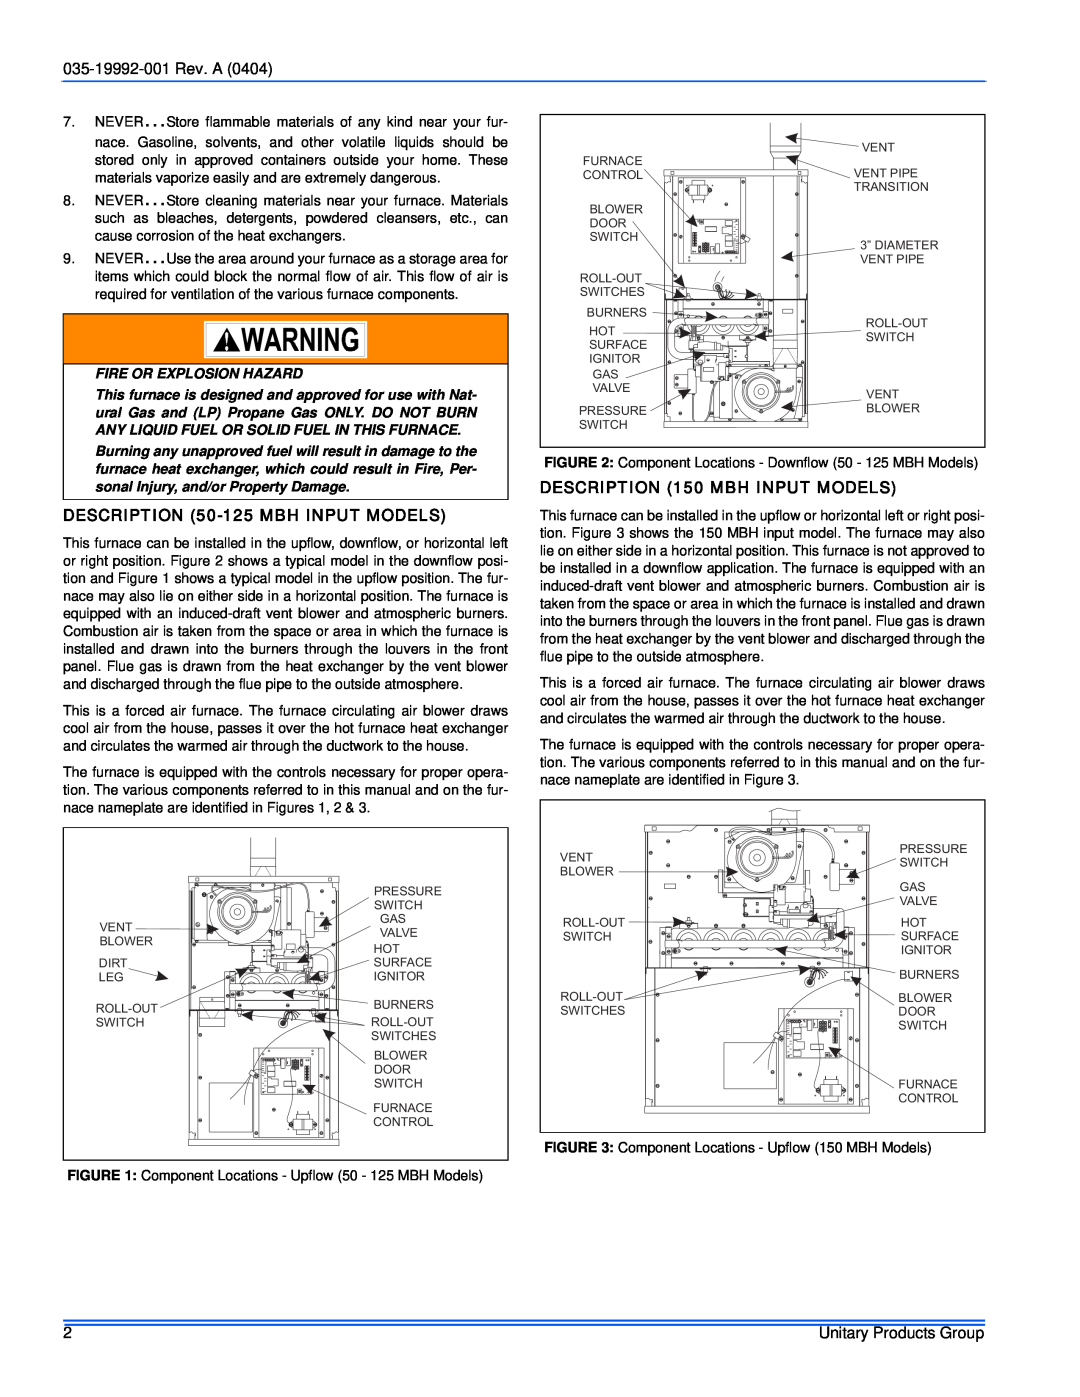 York GF8, G8C service manual DESCRIPTION 50-125MBH INPUT MODELS, DESCRIPTION 150 MBH INPUT MODELS, 035-19992-001Rev. A 